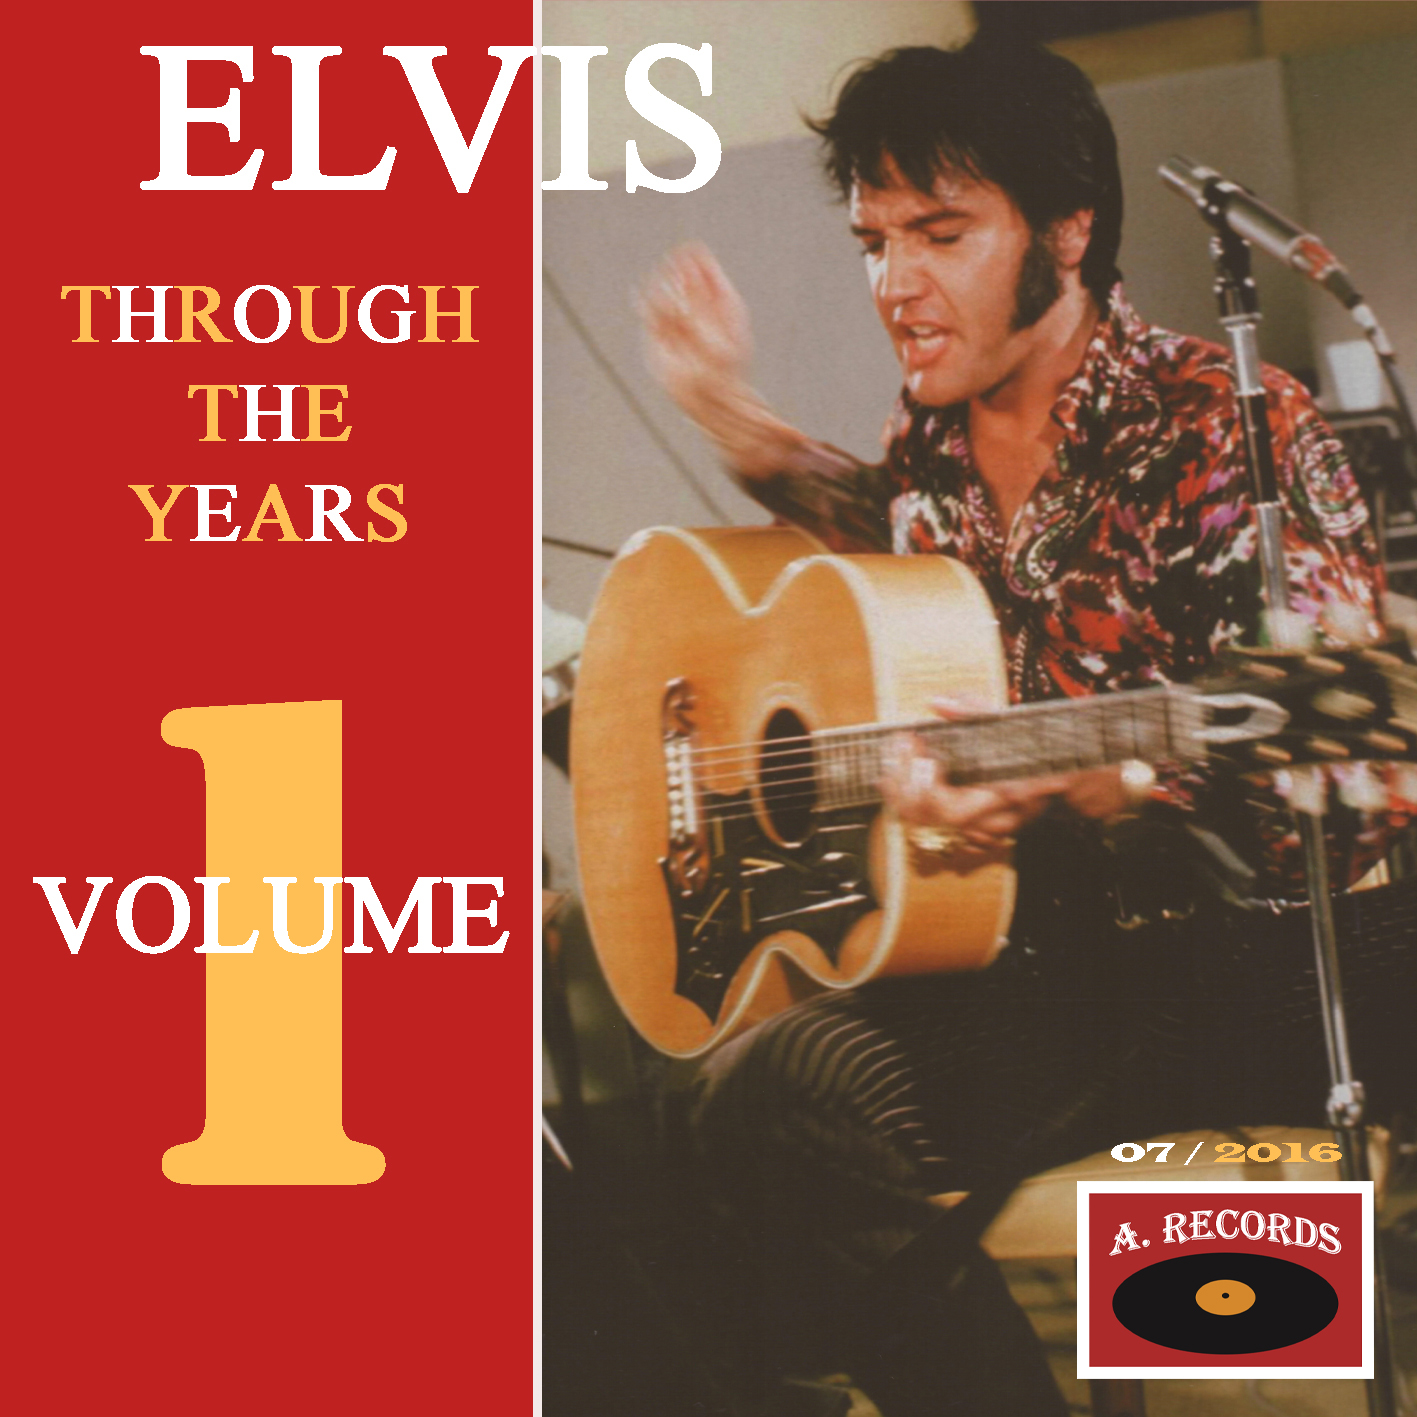 Elvis Through The Years - Volume 1 (July 2016)